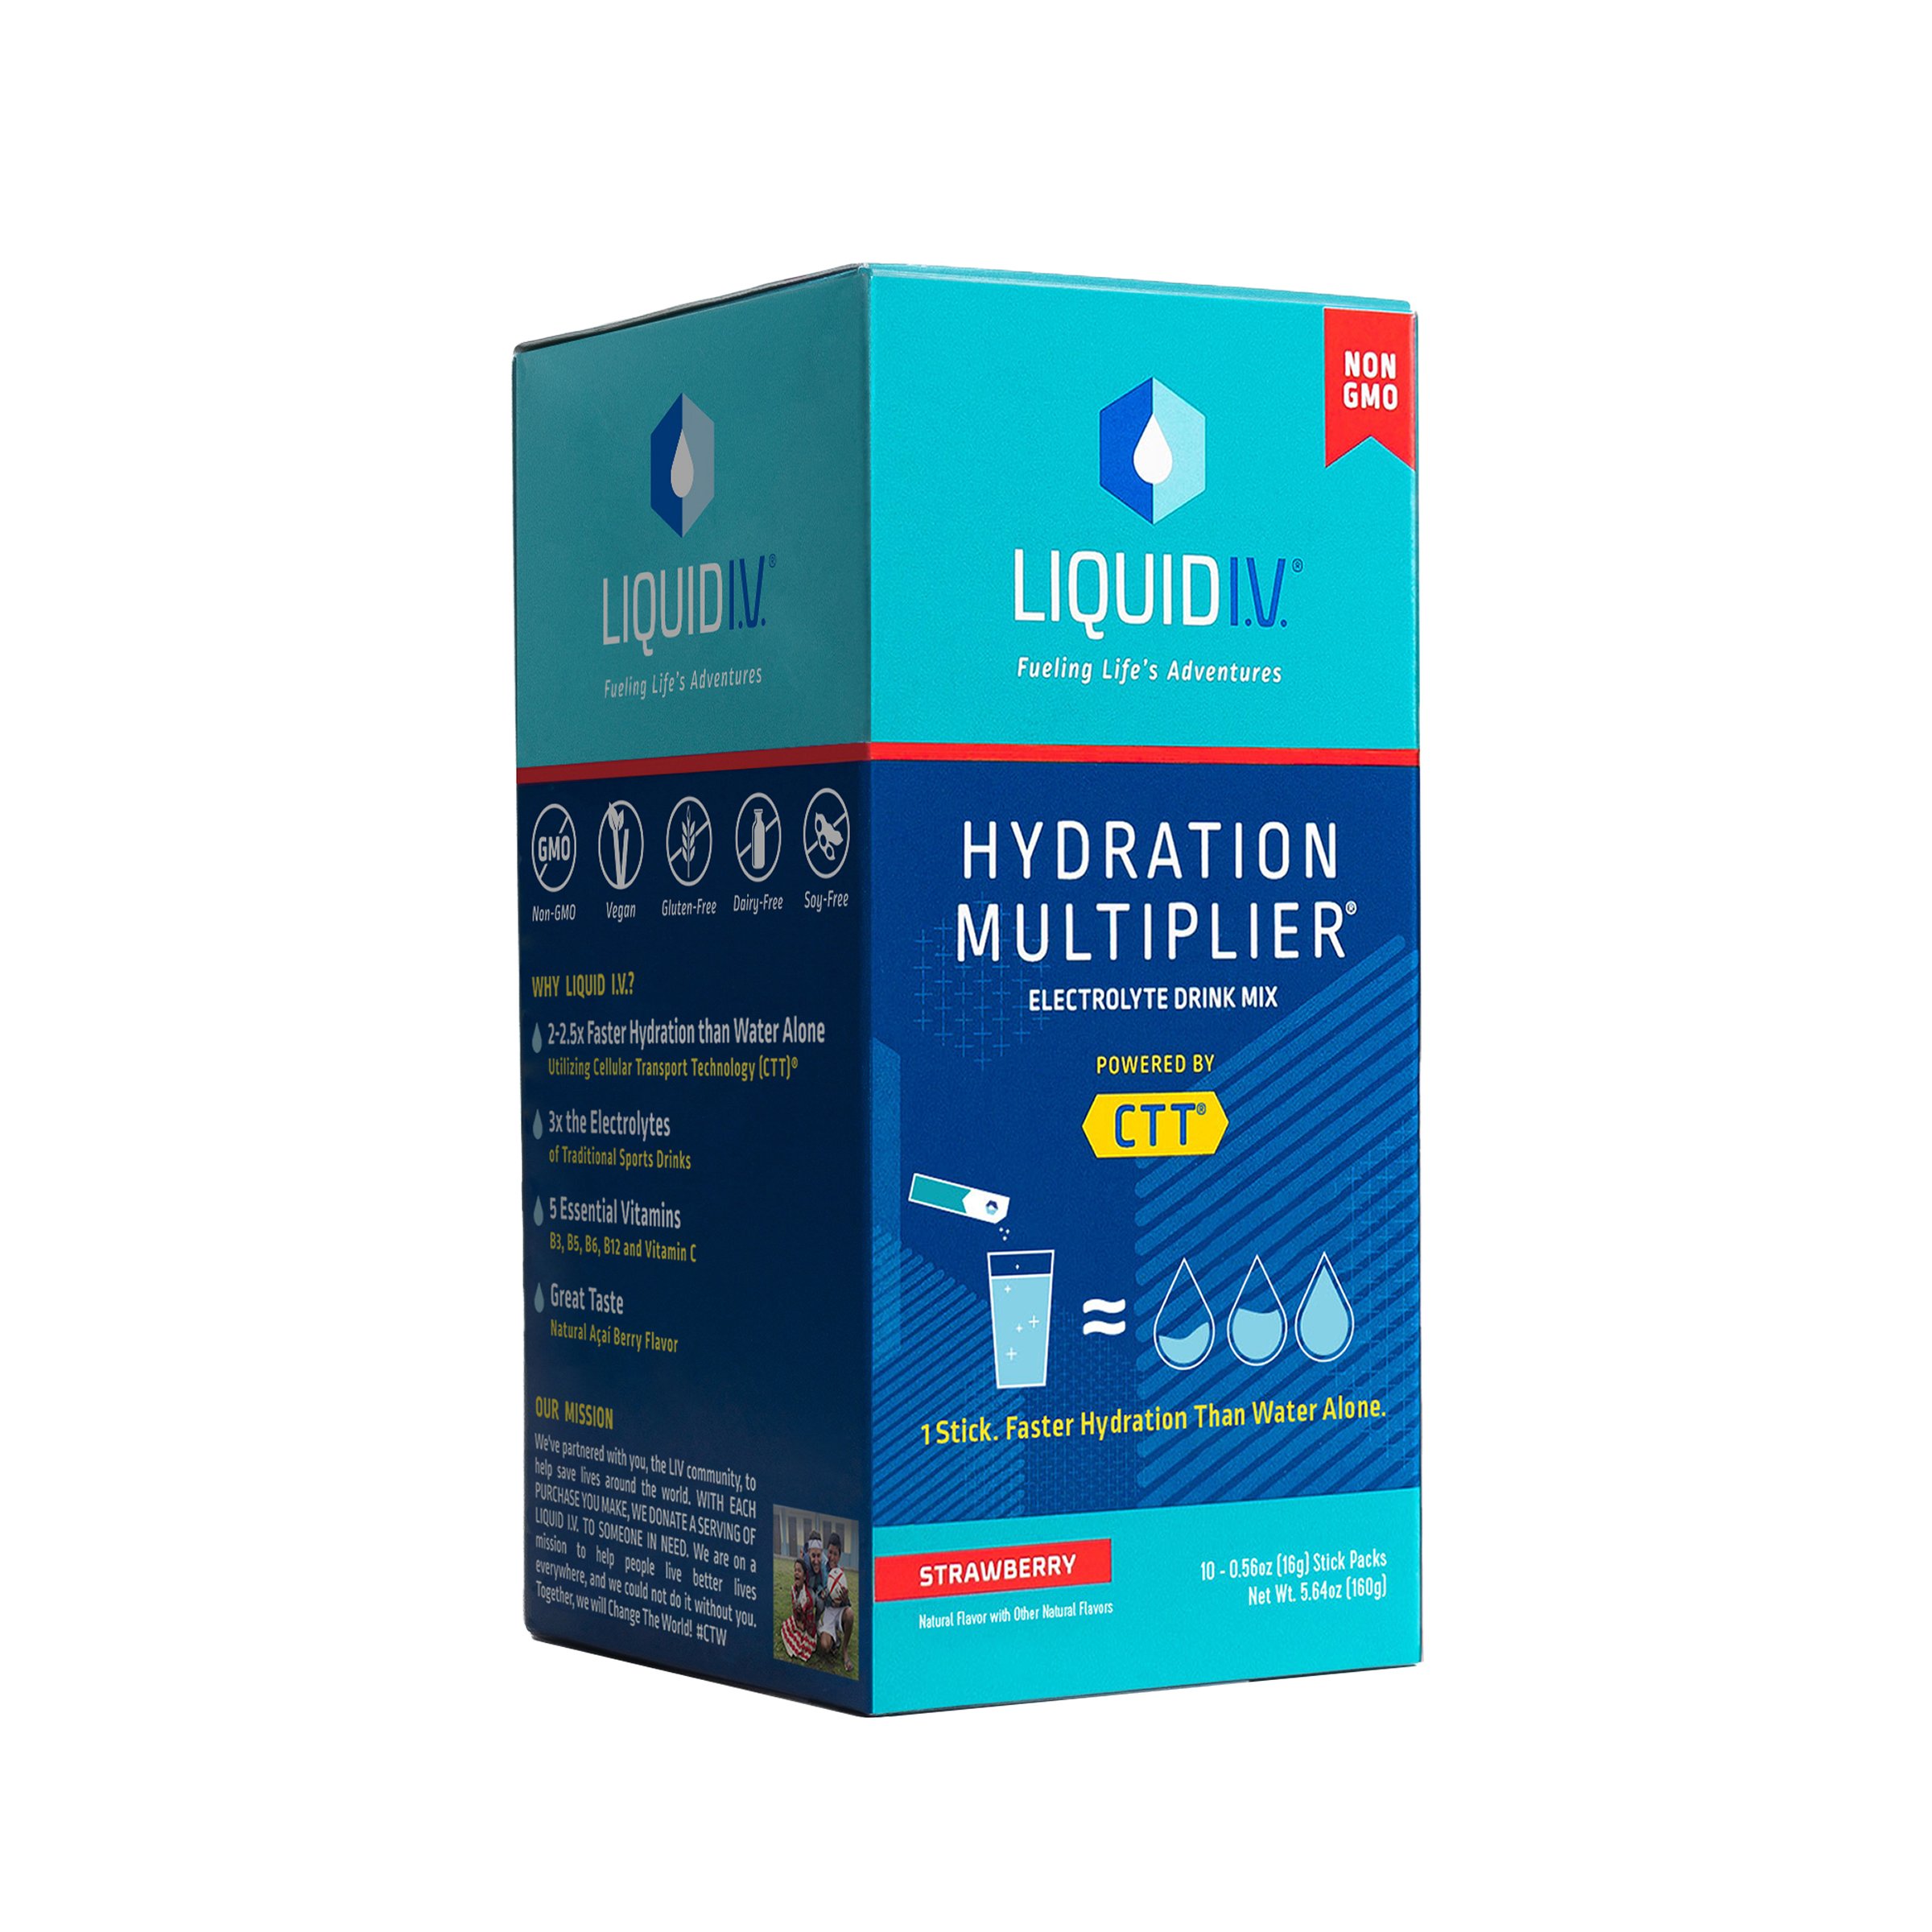 Liquid I.V. Hydration Multiplier Electrolyte Powder Packet Drink Mix,  Strawberry, 6 Ct